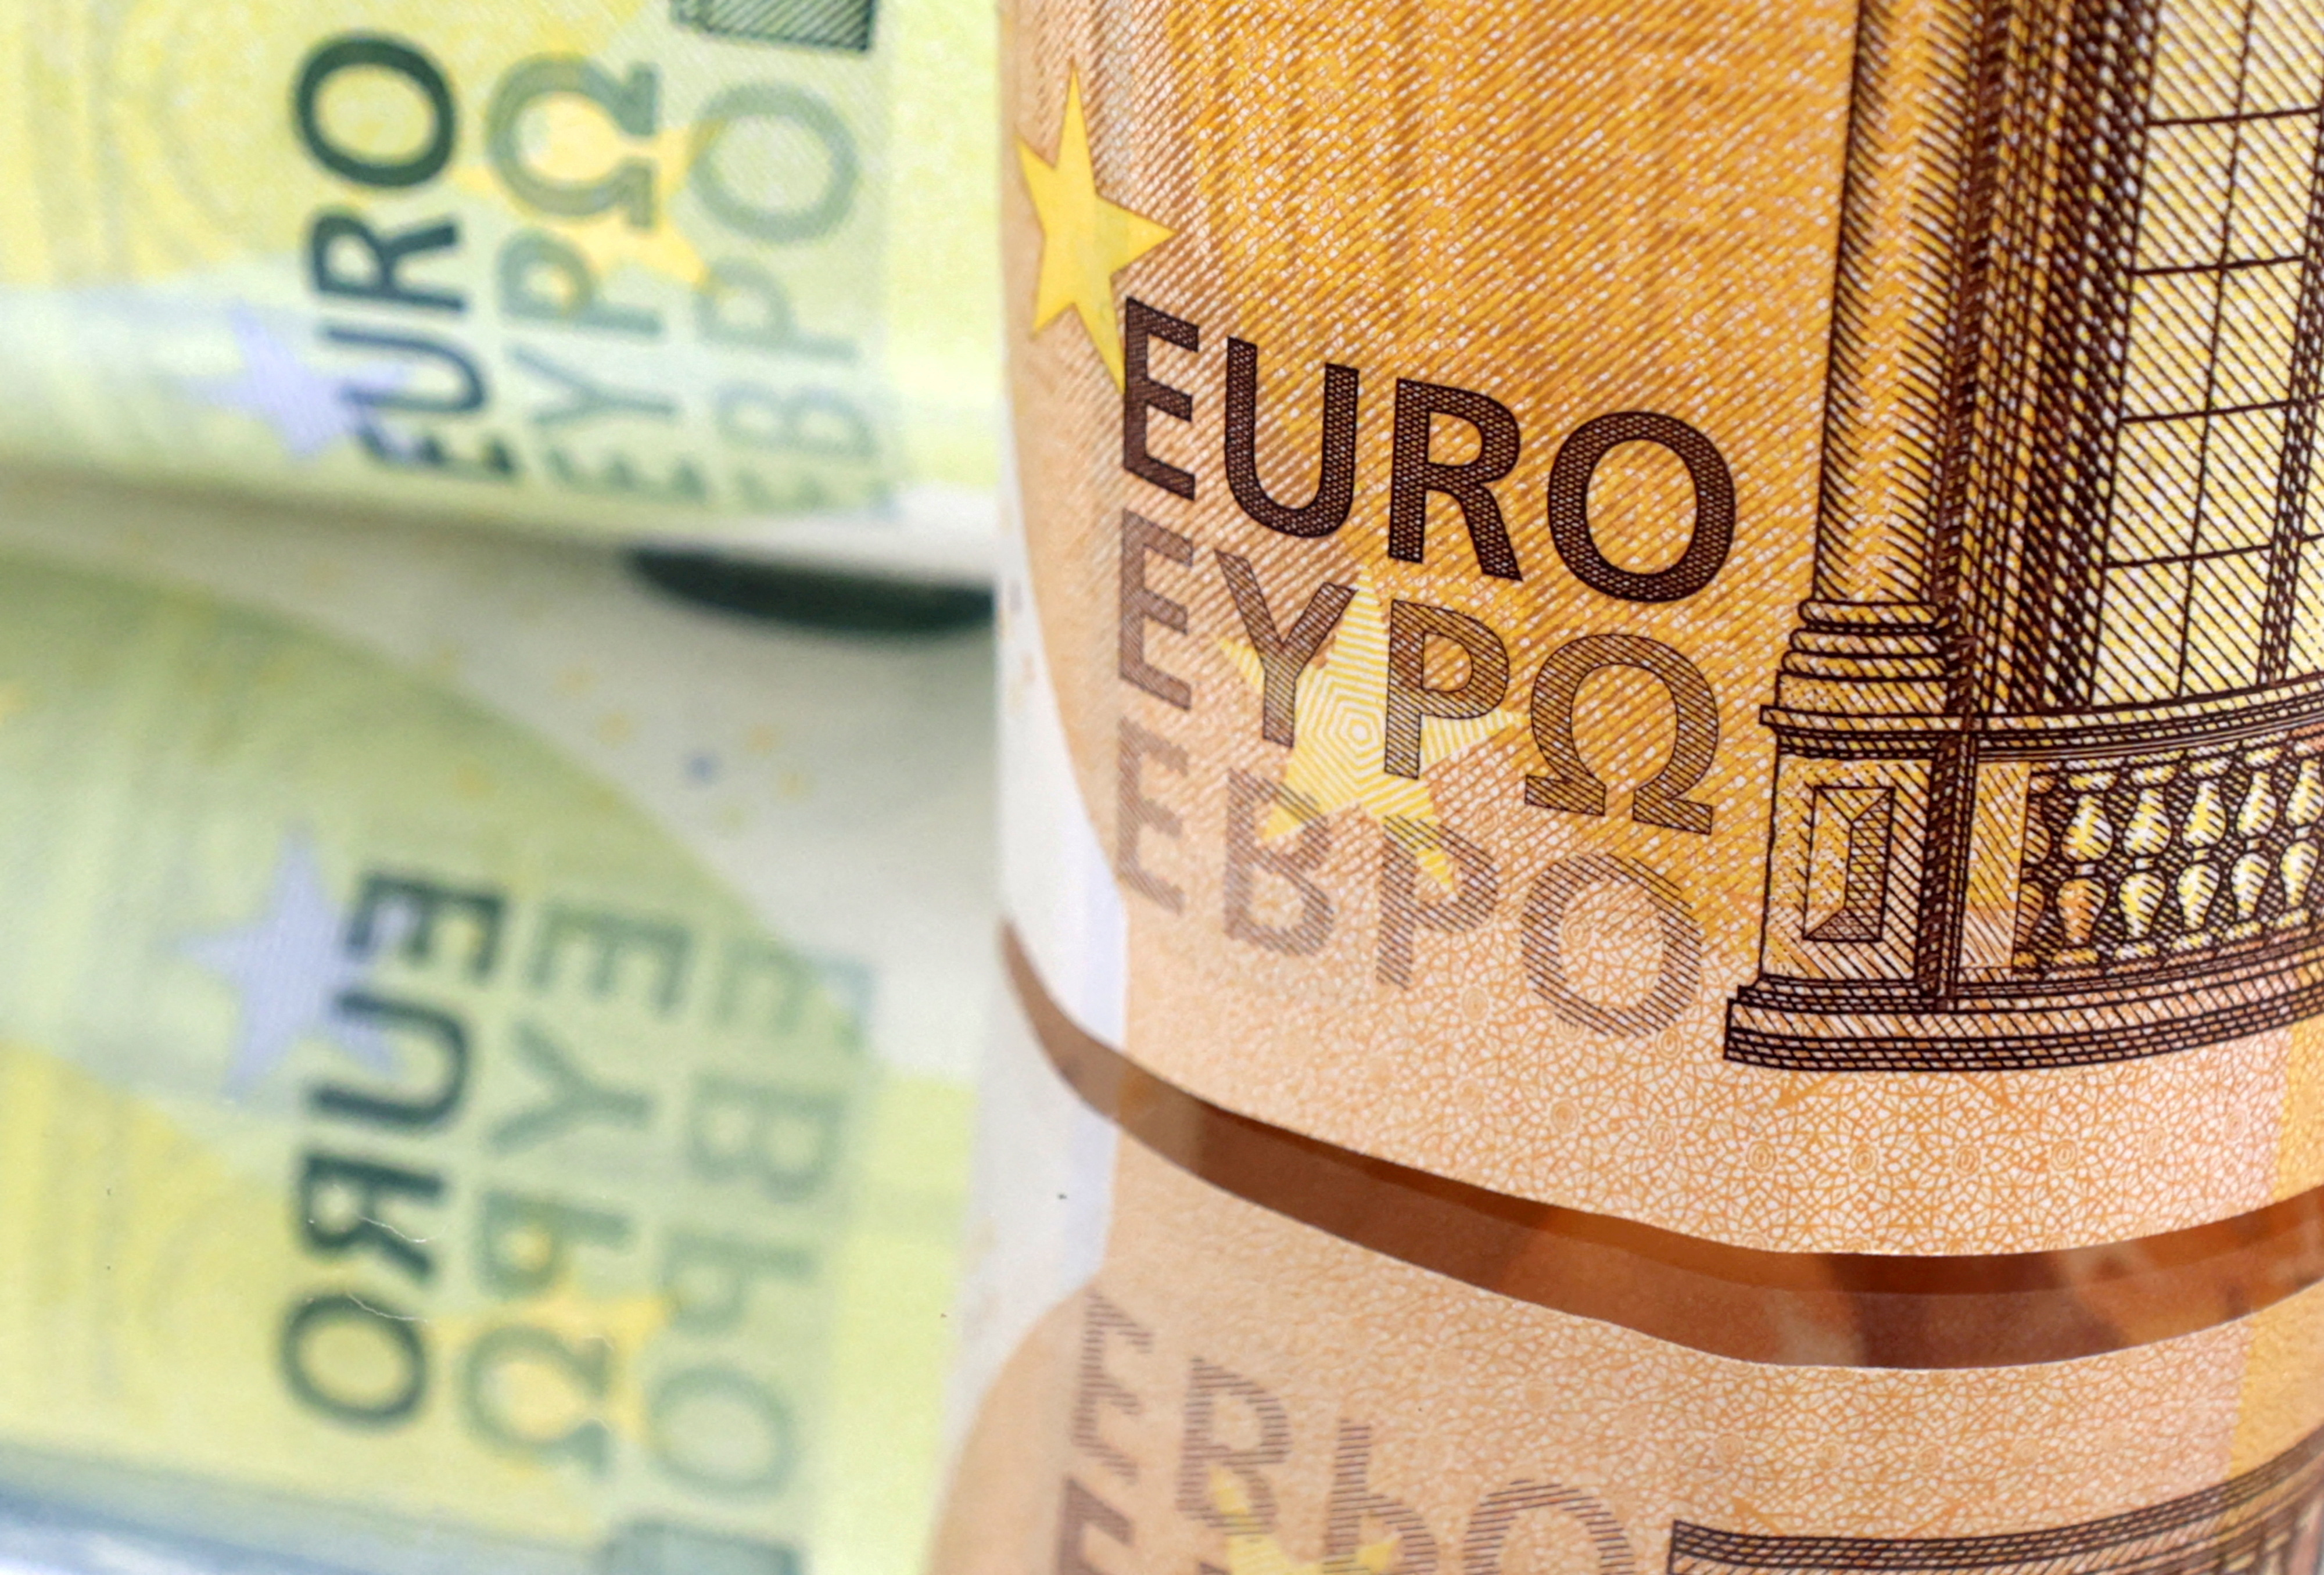 FILE PHOTO: Illustration shows Euro banknotes